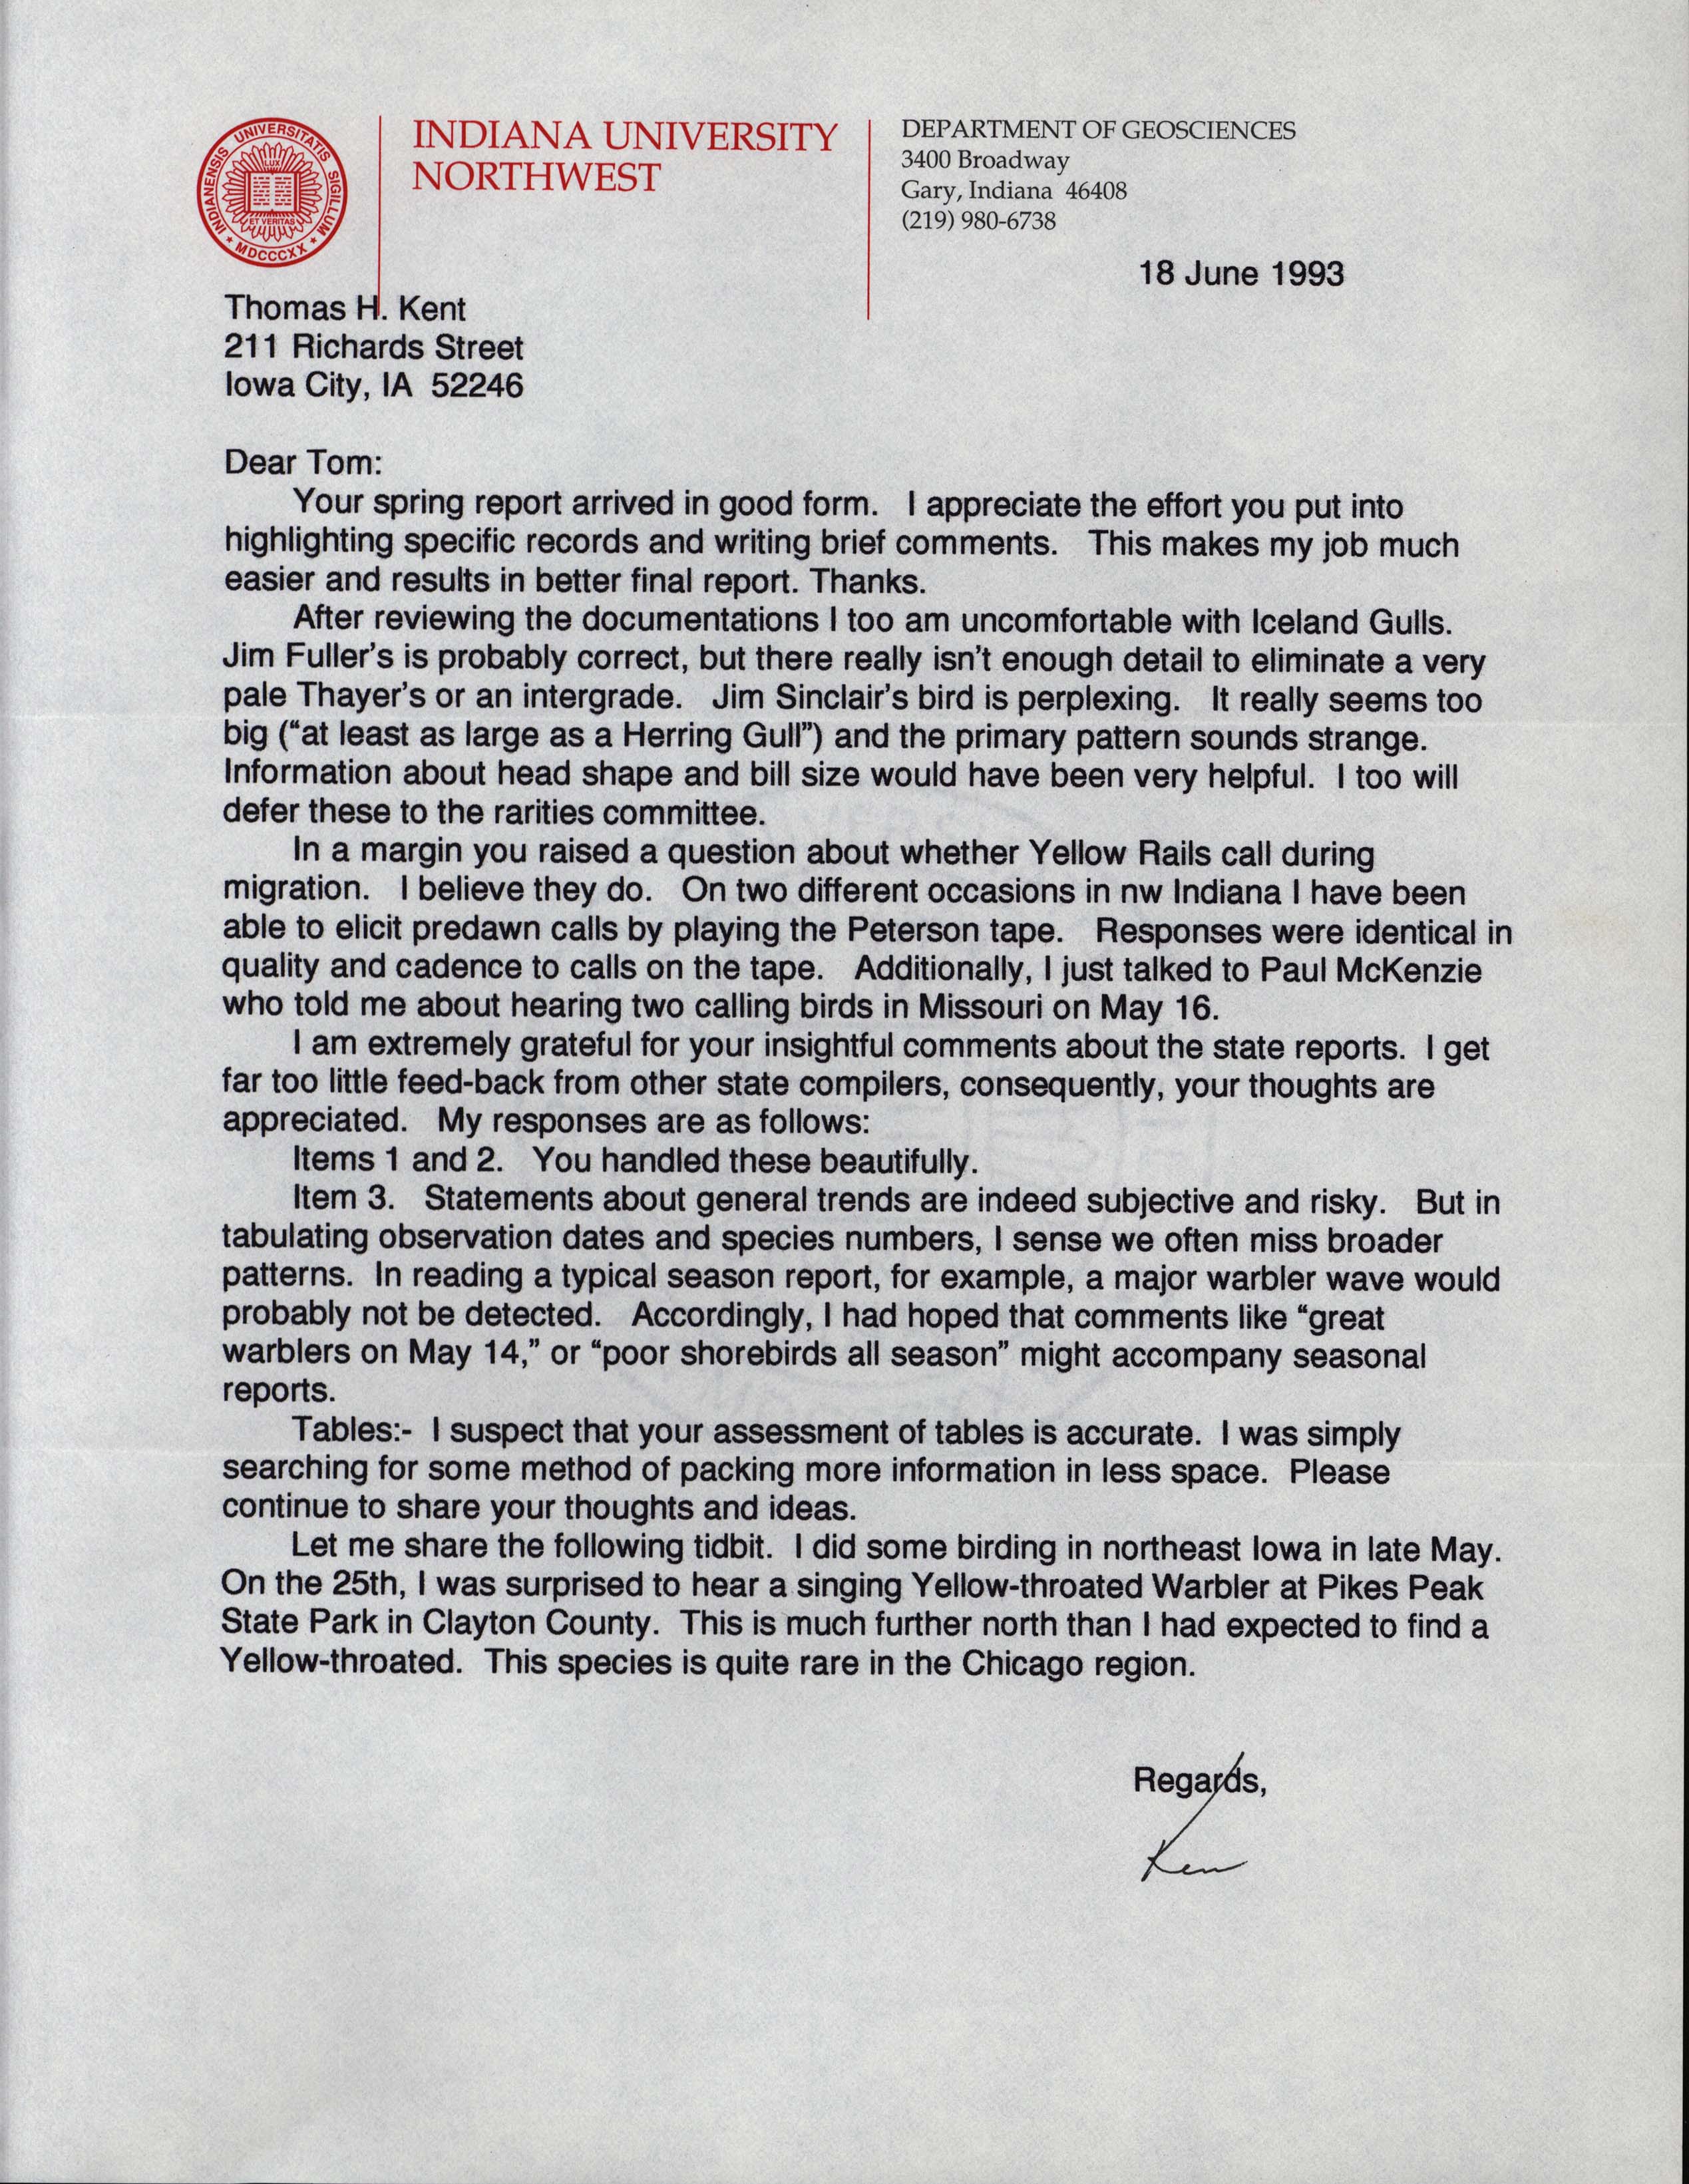 Kenneth Brock letter to Thomas Kent regarding Iowa bird documentation, June 18, 1993